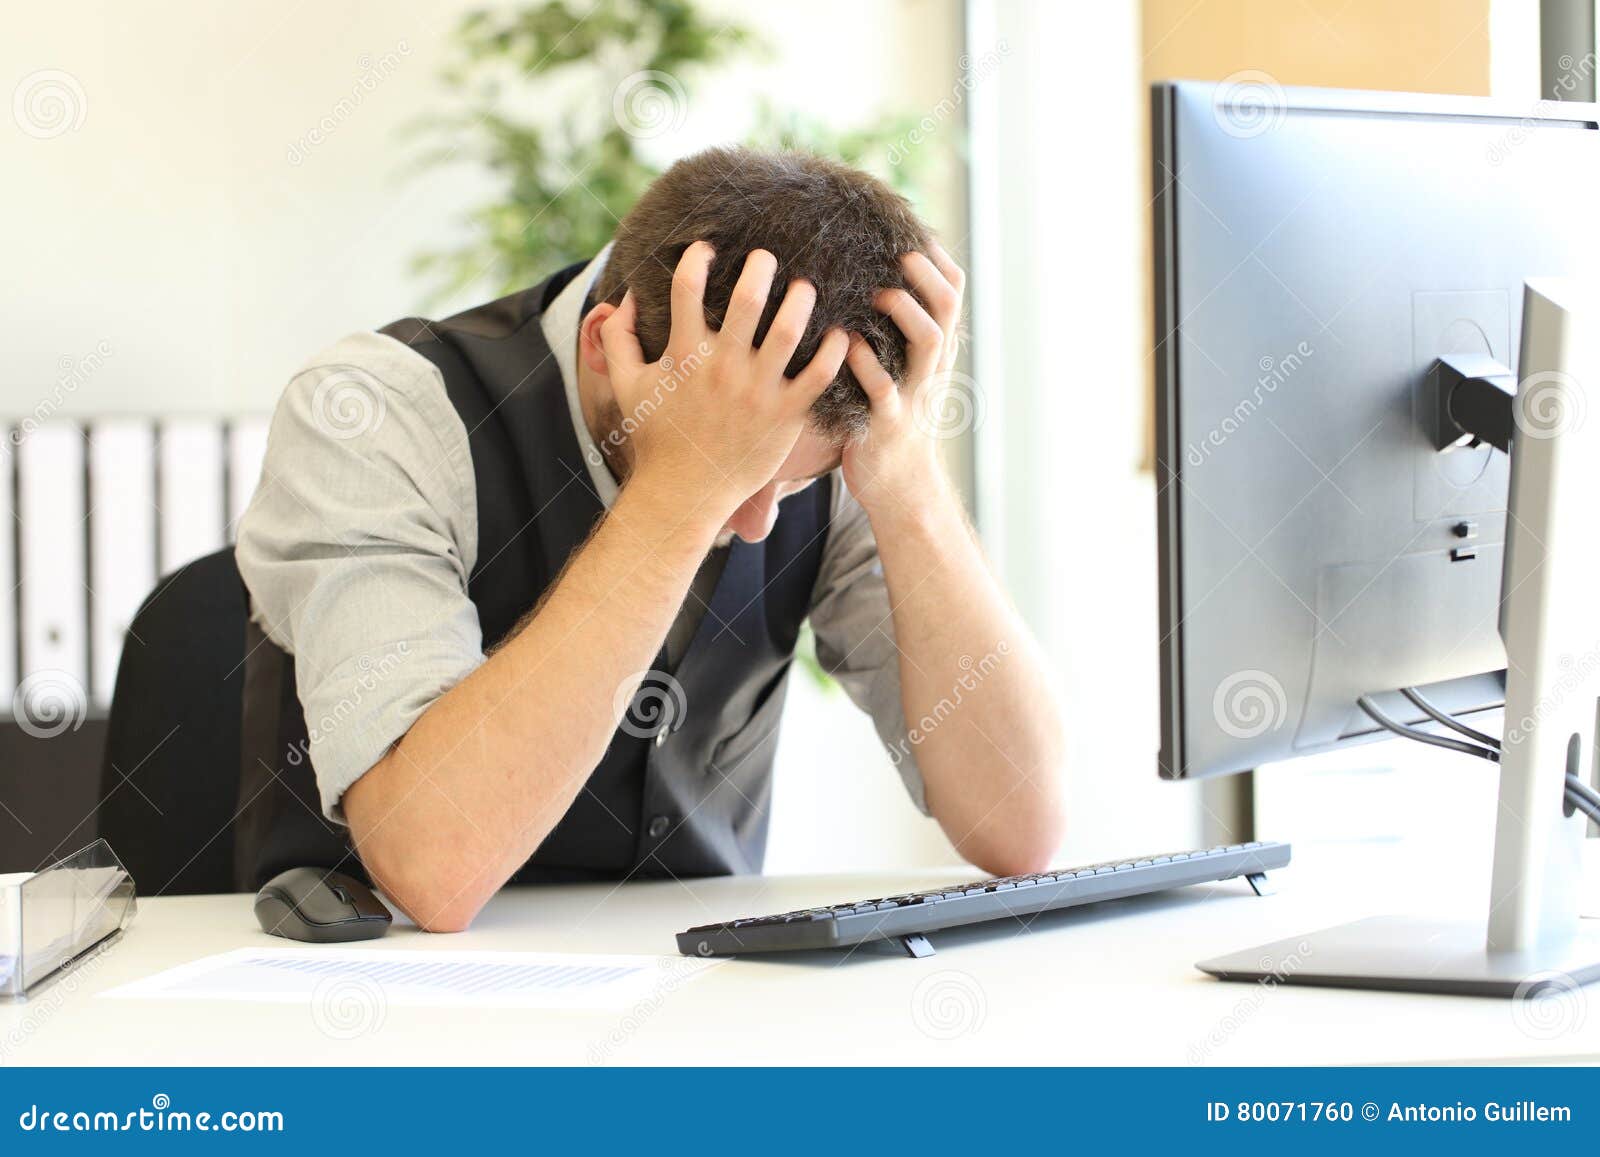 depressed businessman after bankruptcy at office